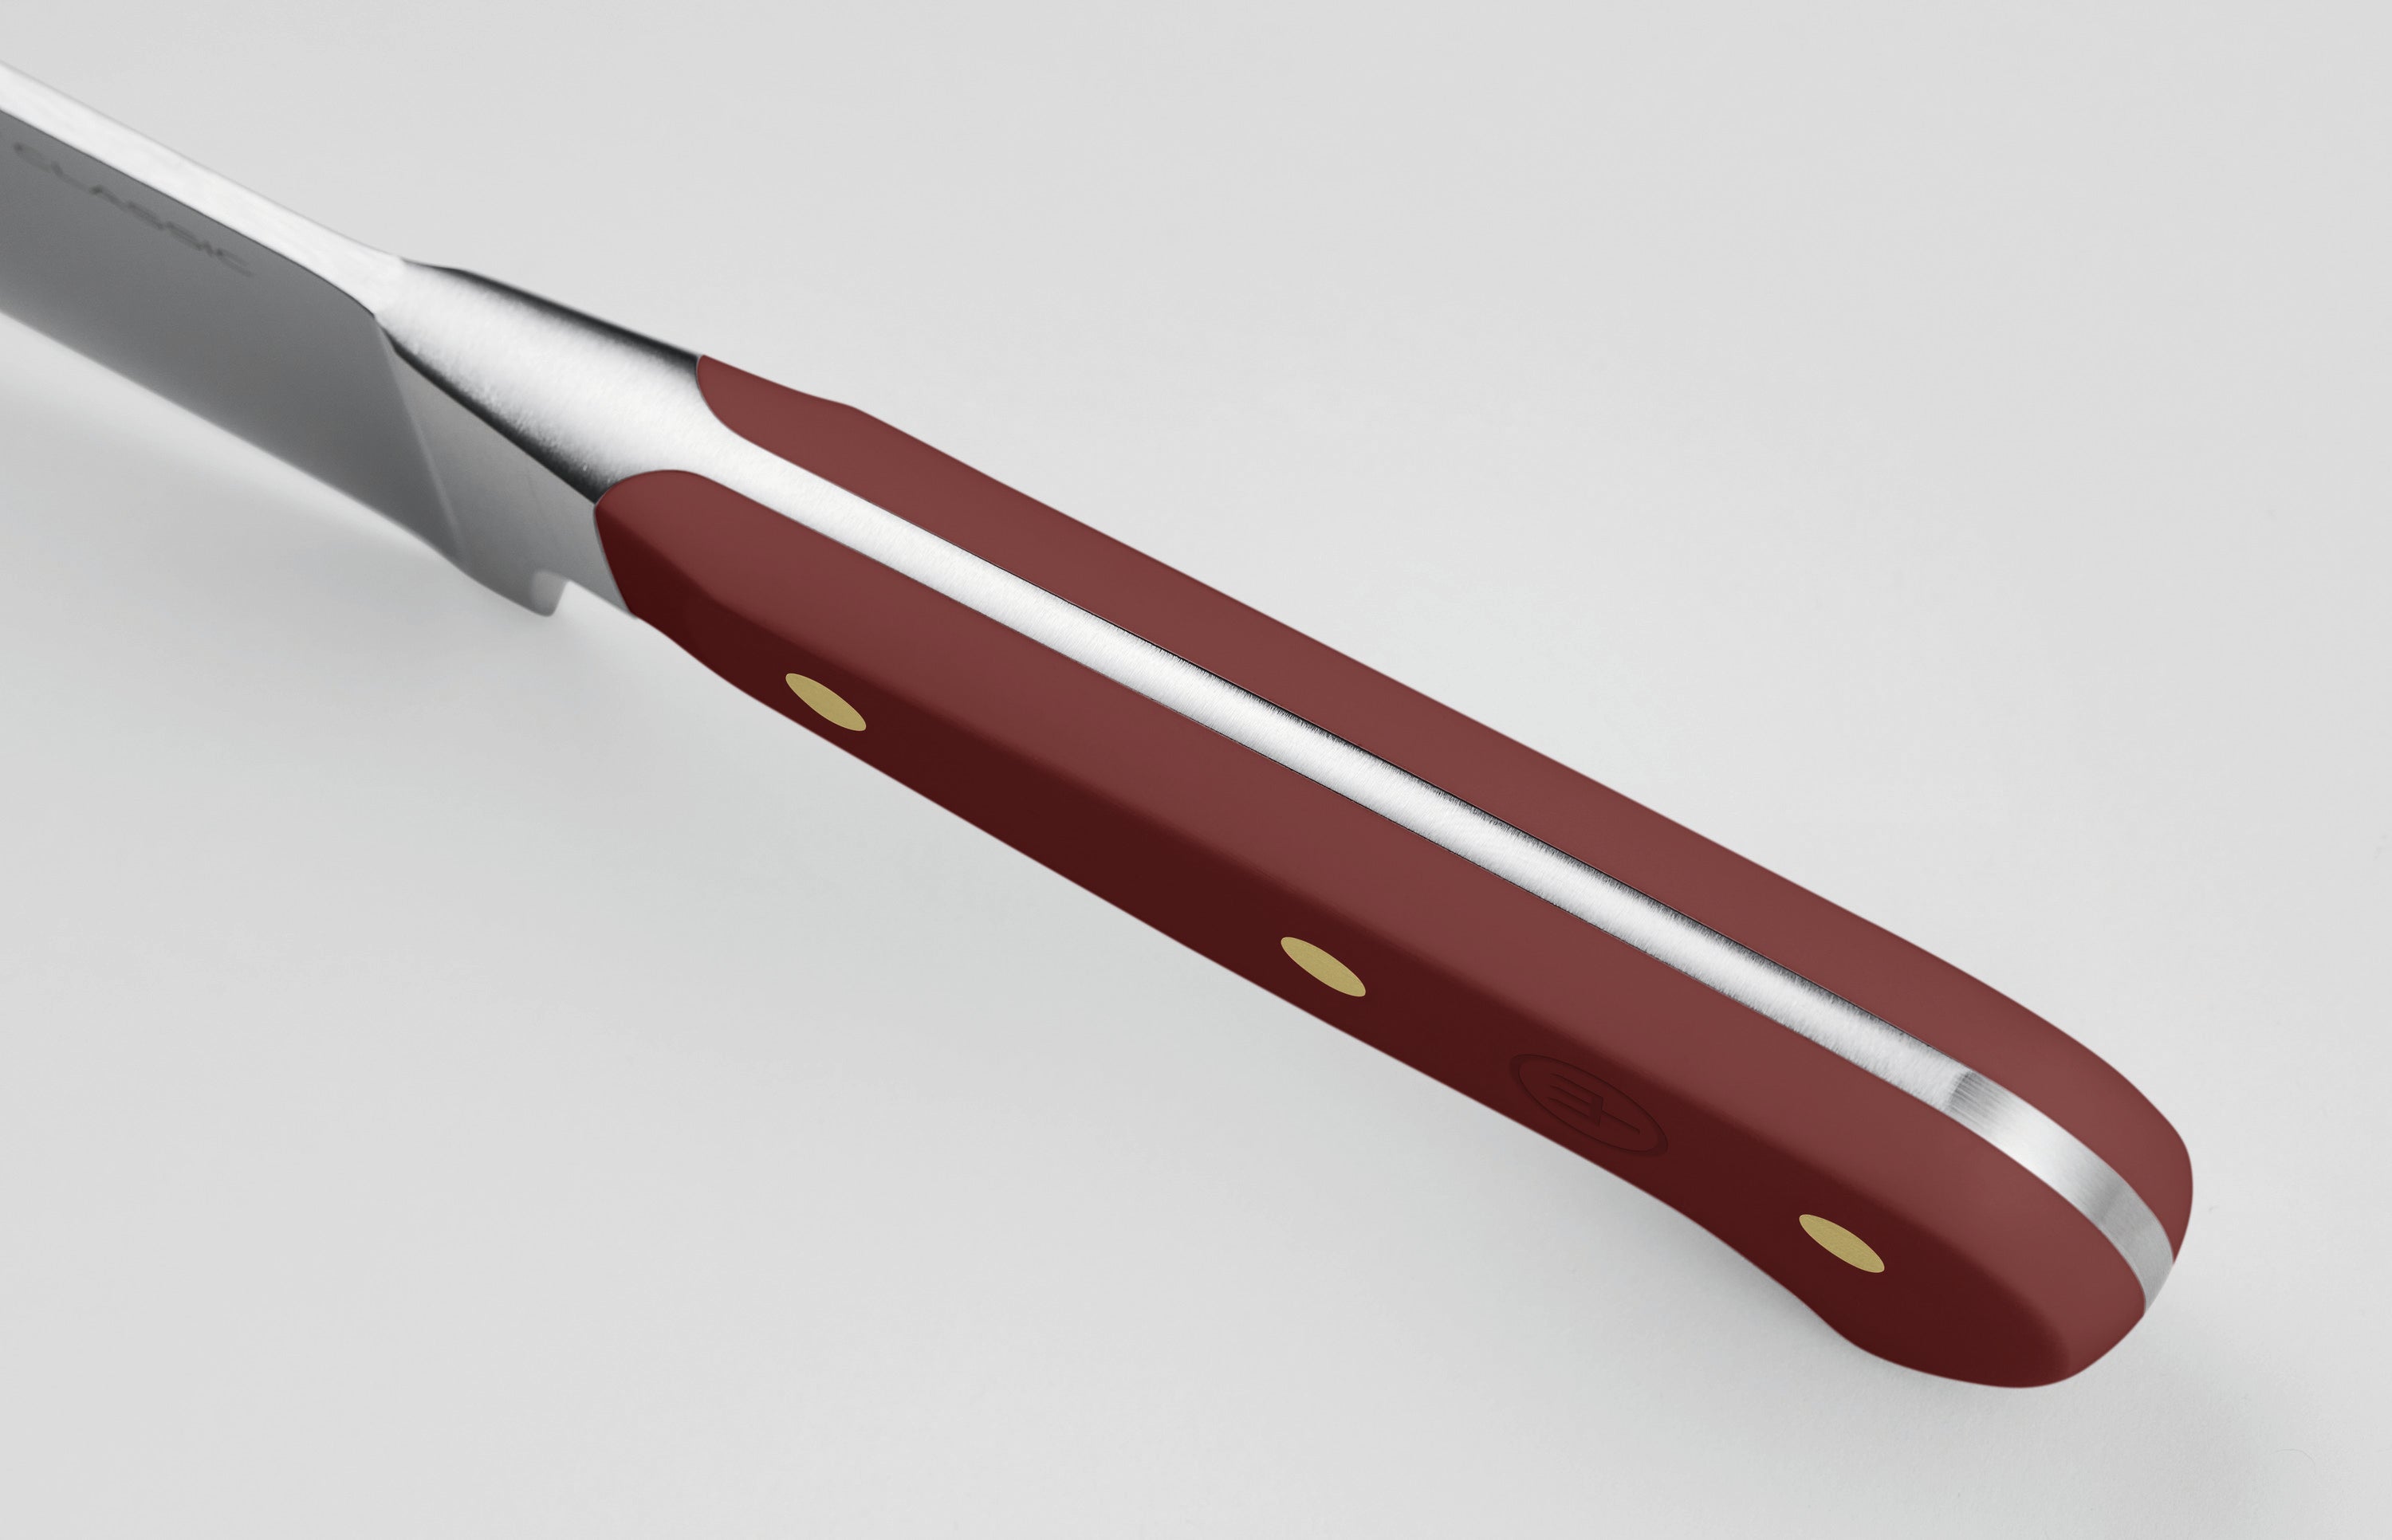 Wusthof Classic Colour Tasty Sumac Serrated Utility Knife 14cm 1061708514W